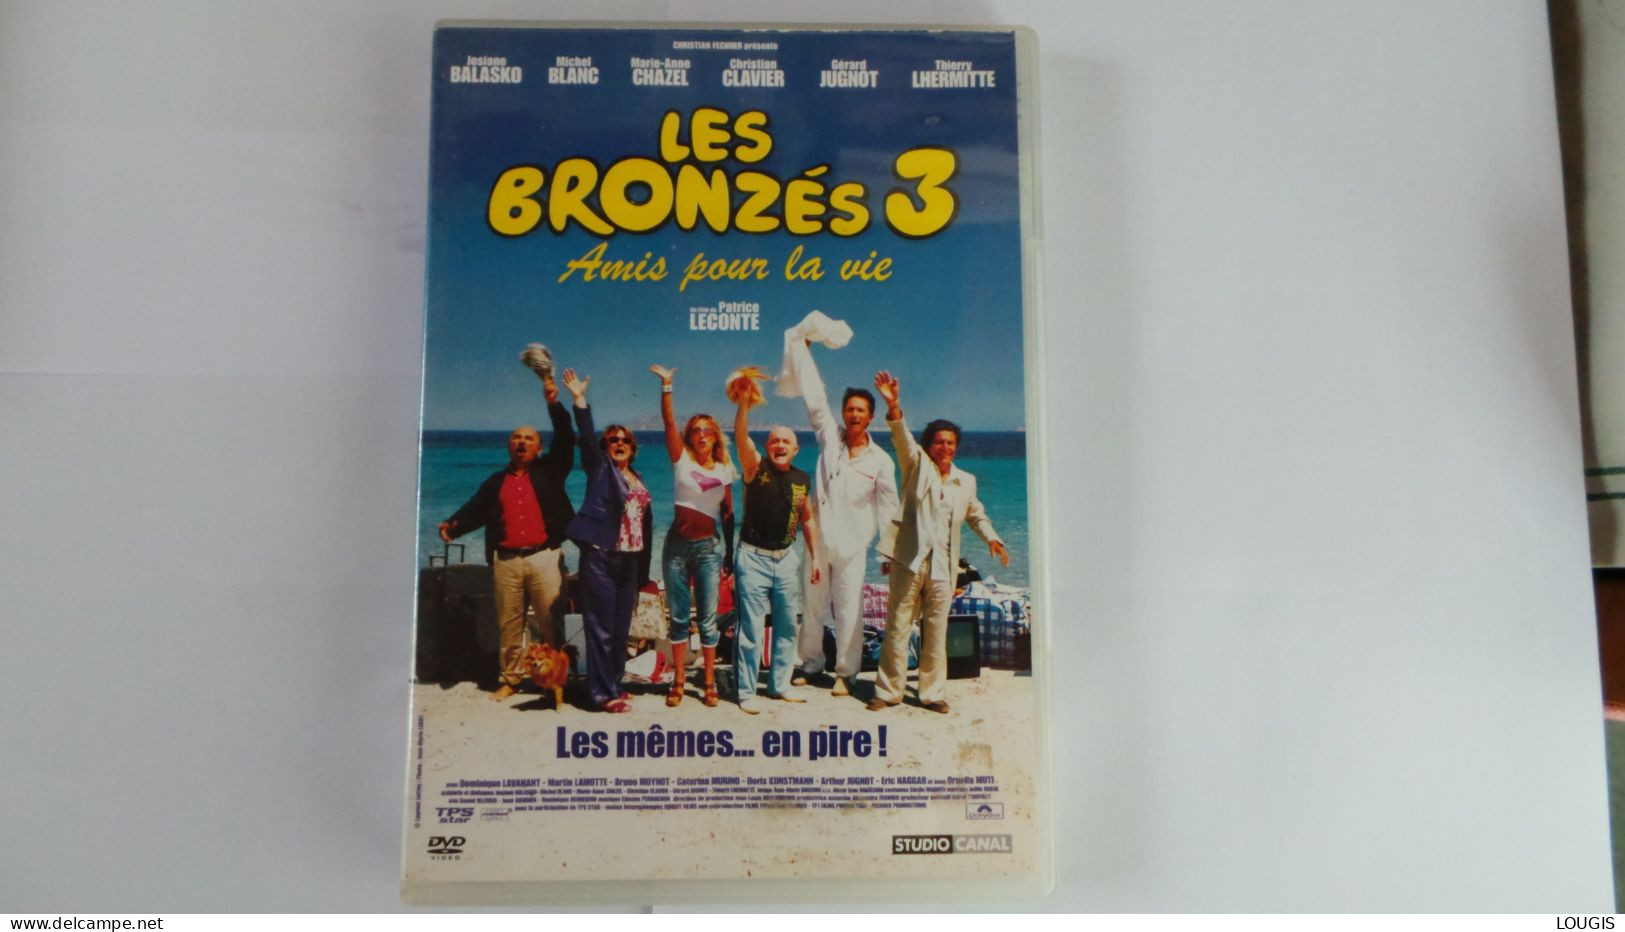 Les Bronzés 3 - Musik-DVD's